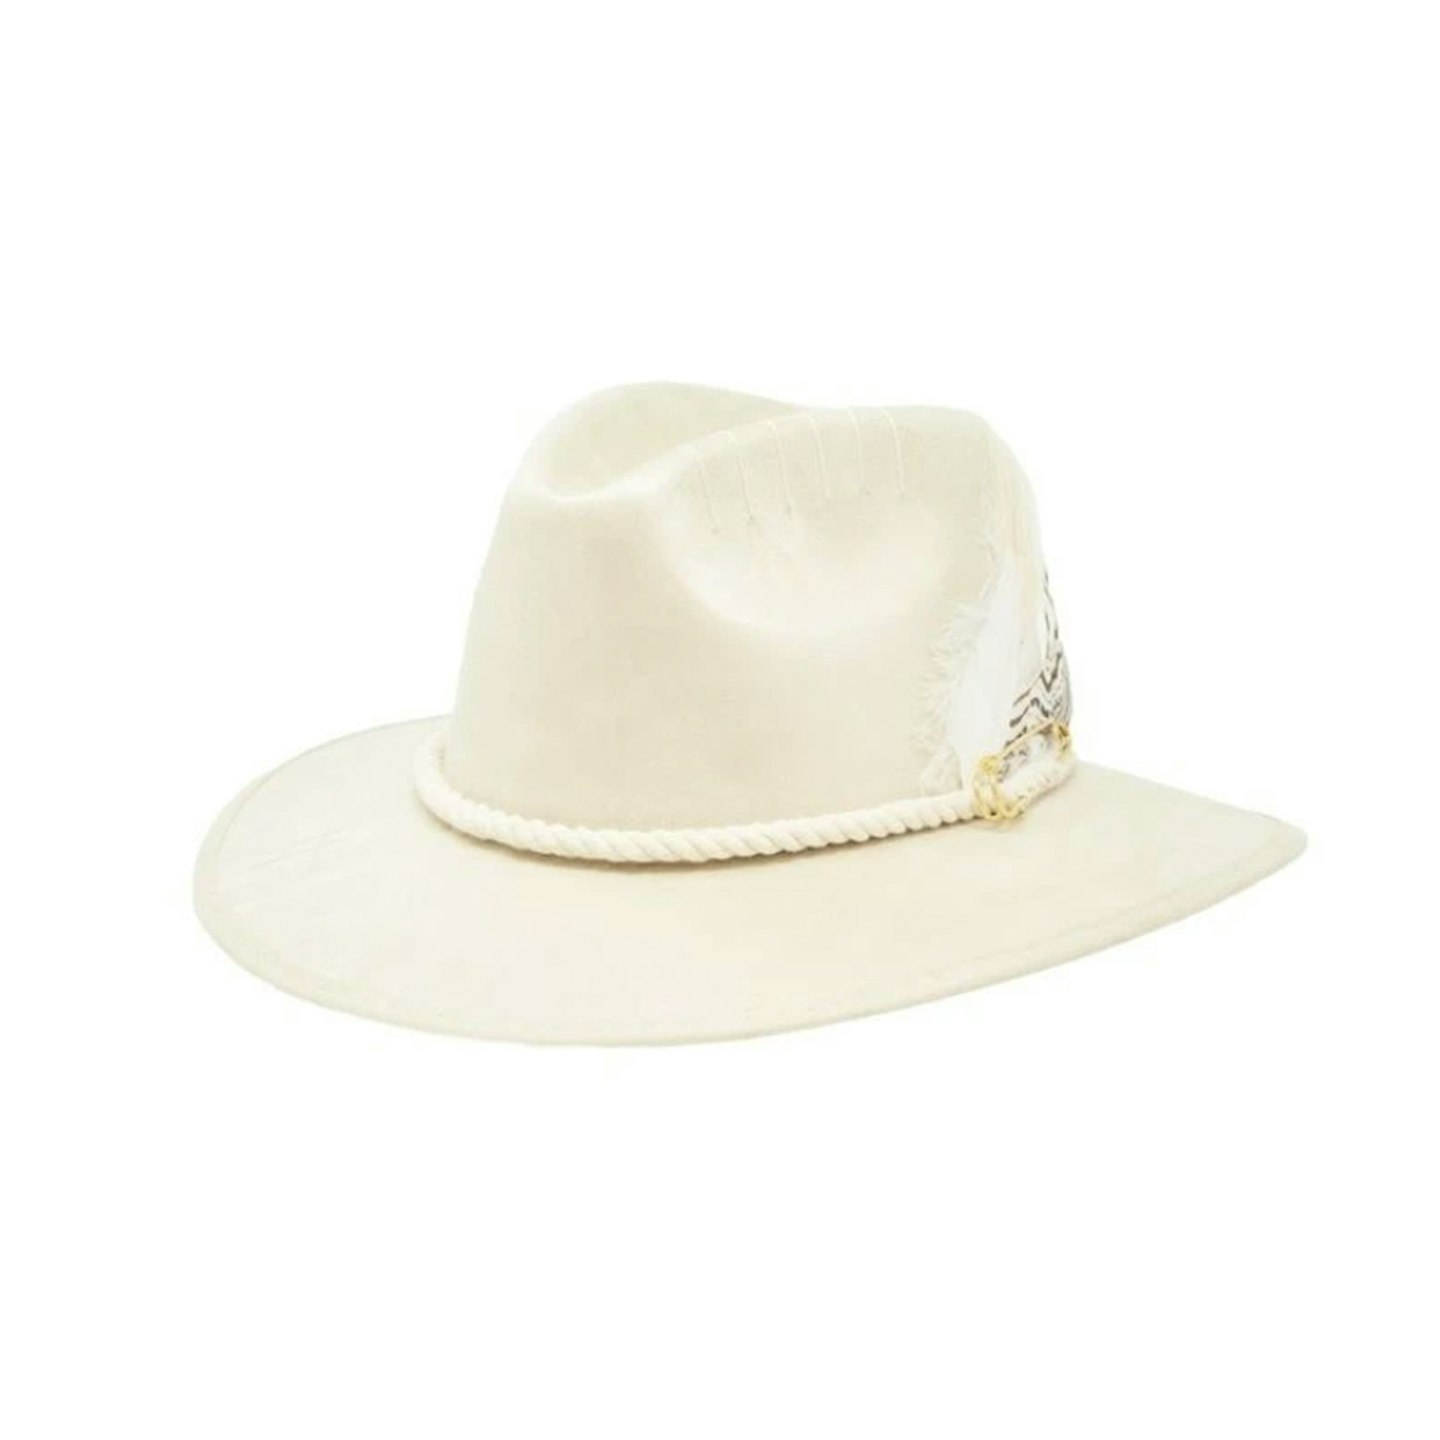 The Best of Modern Artisans - Tuluminati Chikin Hat